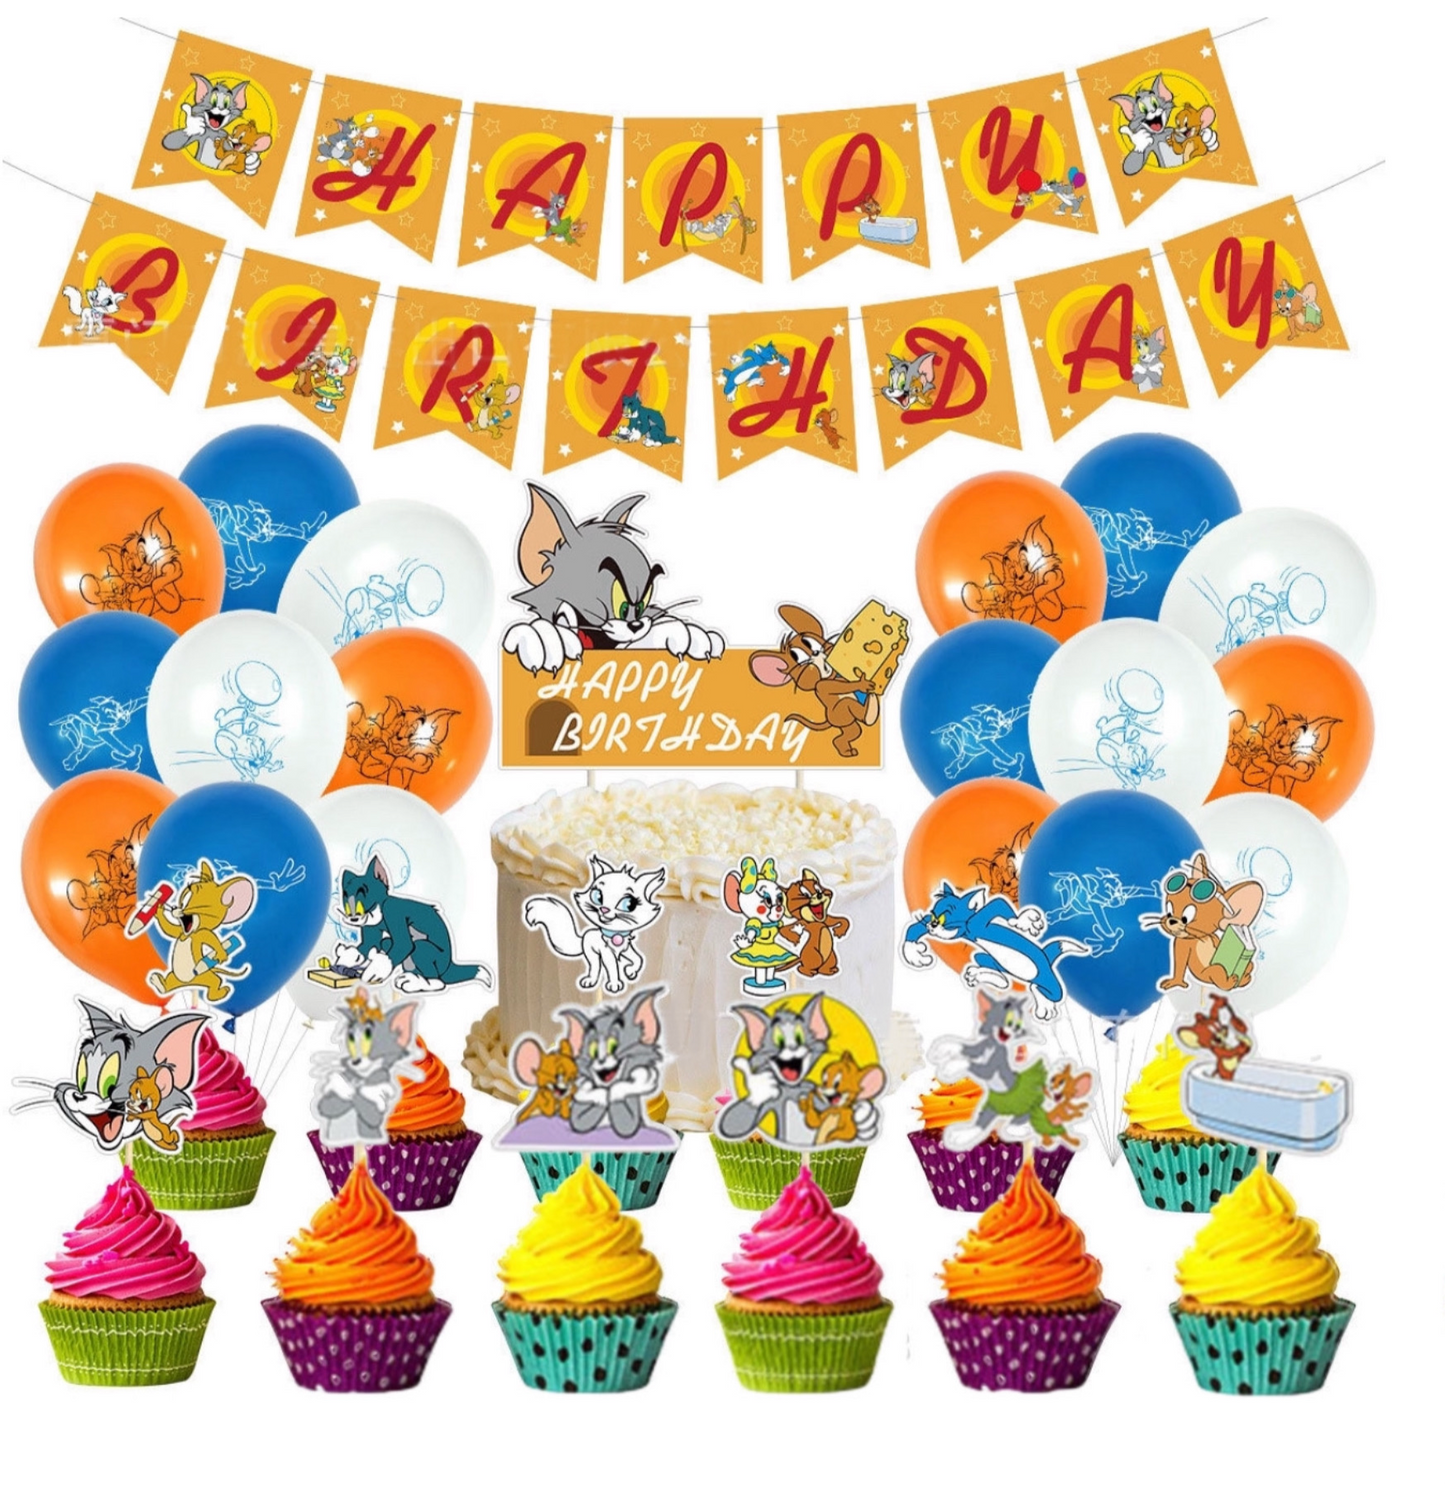 Tom & Jerry Birthday party set